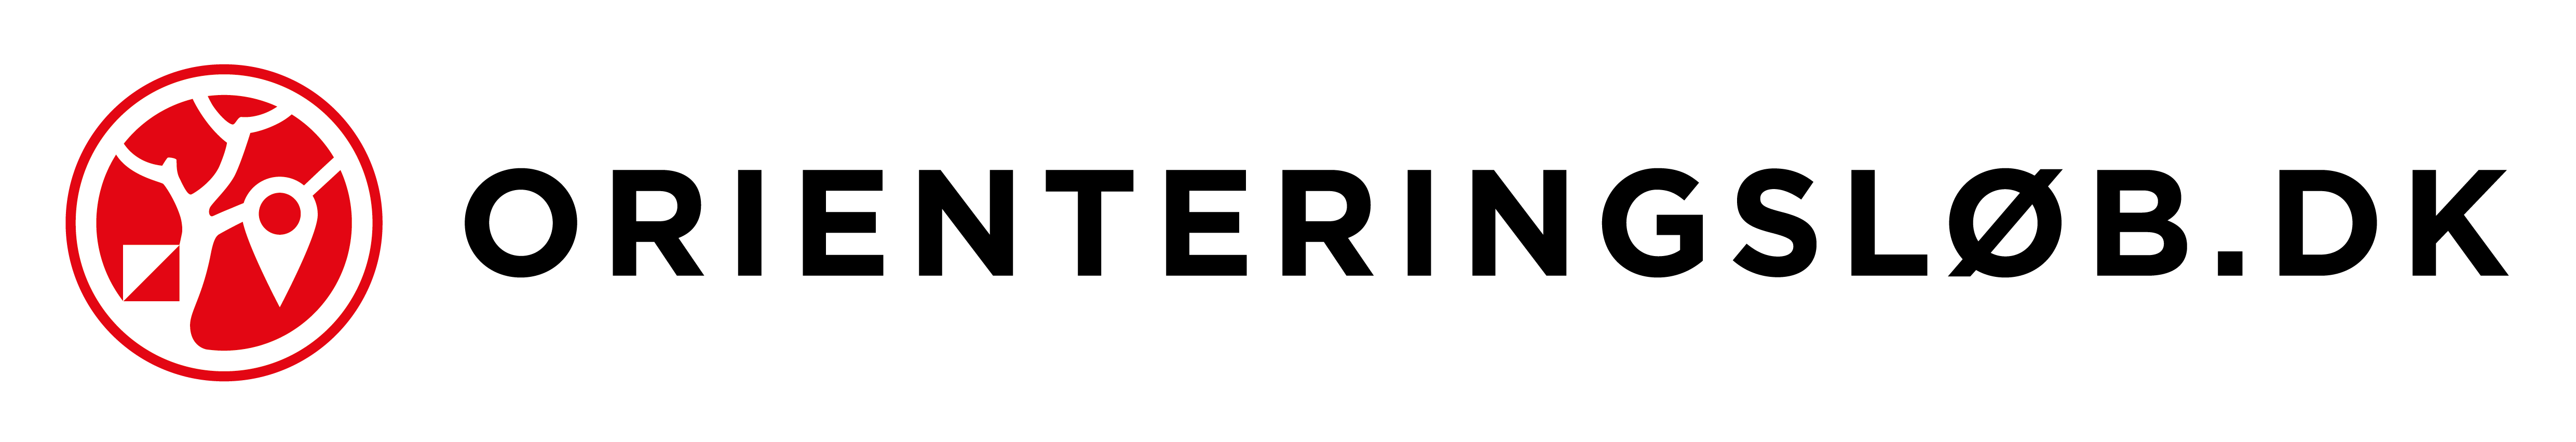 Oloebdk logo stortekst